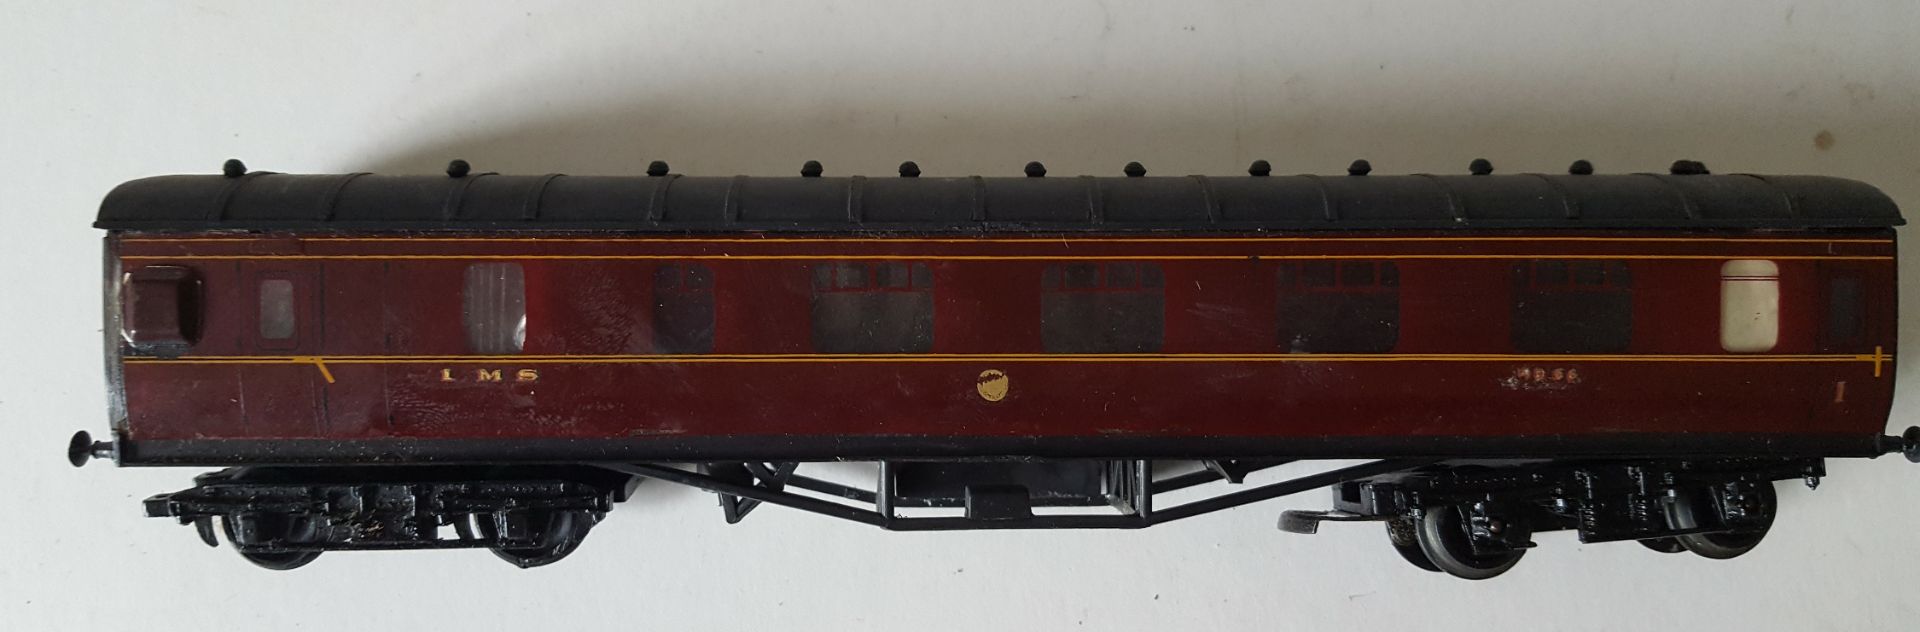 Vintage Retro 3 x Model Train Coaches 00 Guage - Image 2 of 4